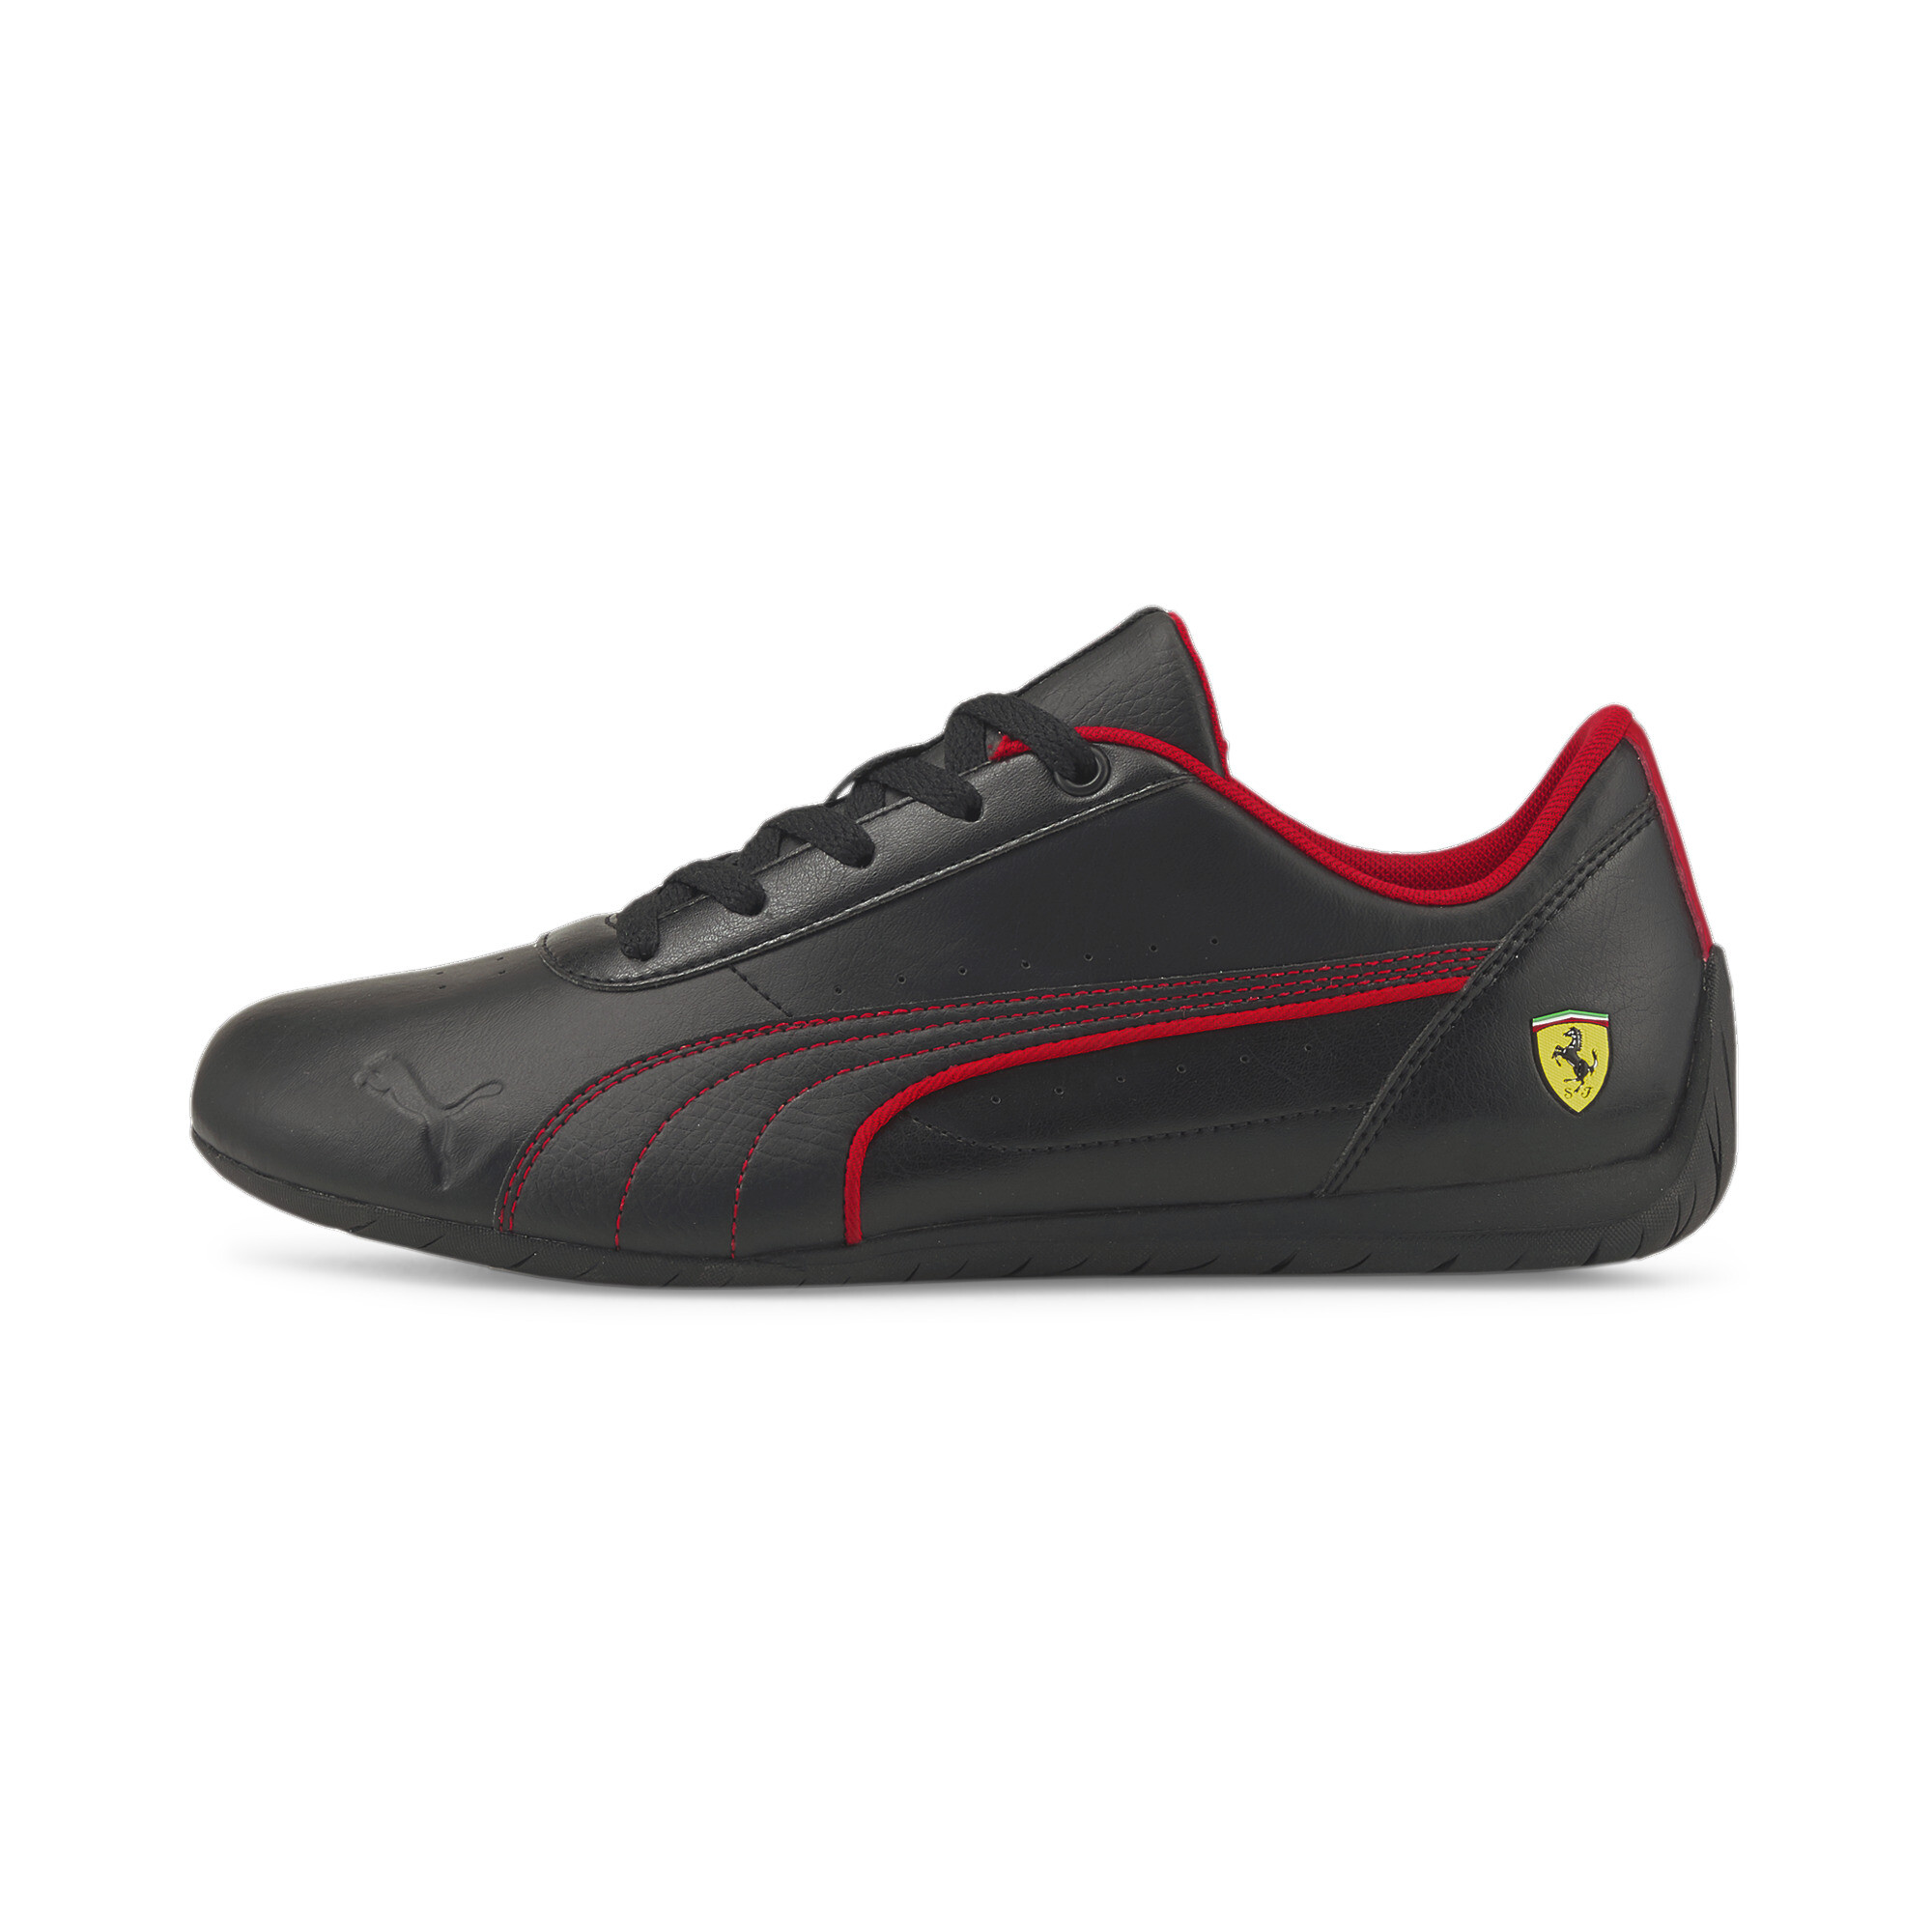 PUMA Men's Scuderia Ferrari Neo Cat Motorsport Shoes | eBay